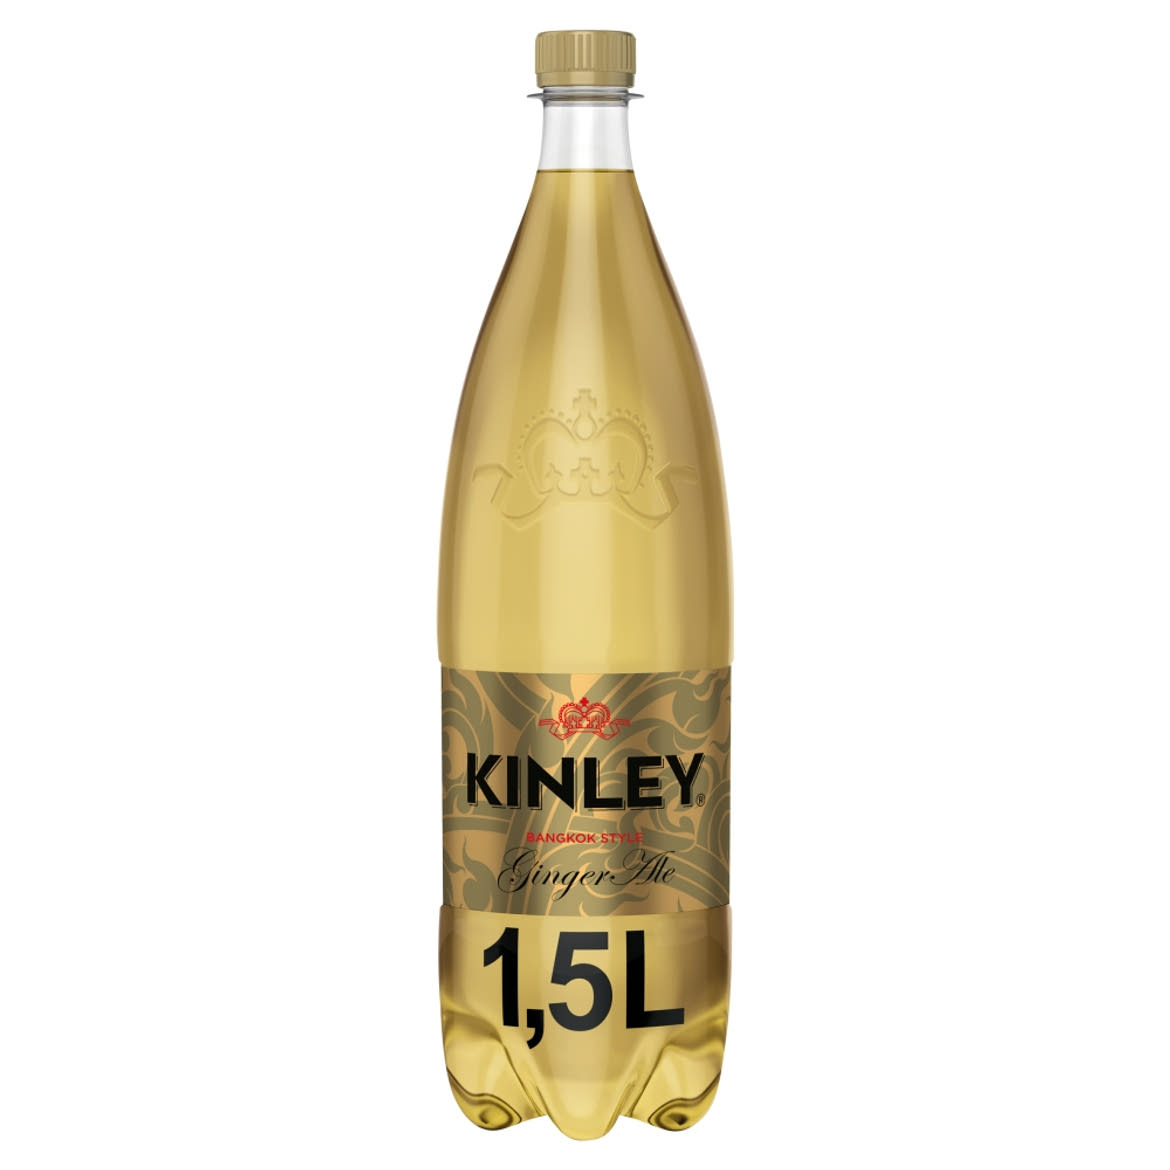 Kinley Ginger Ale gyömbérízű szénsavas üdítőital